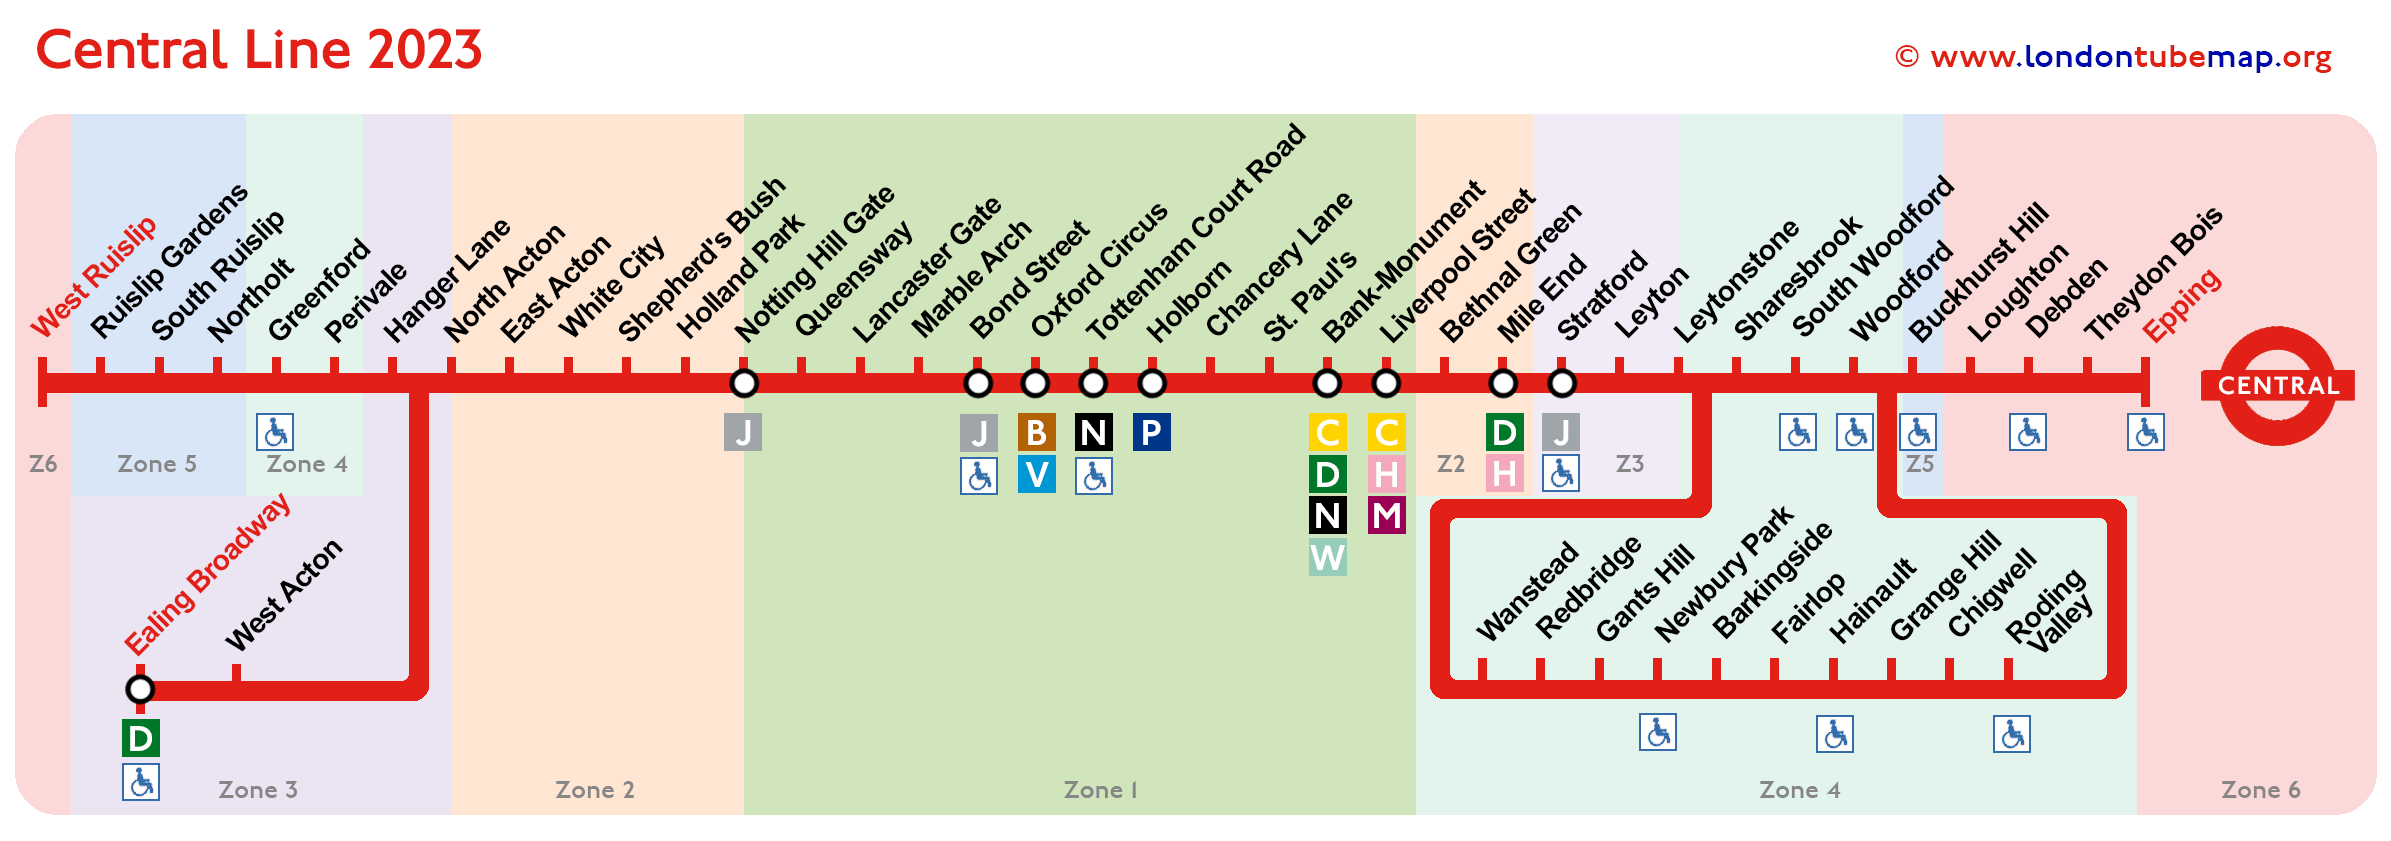 Central Line 2023 